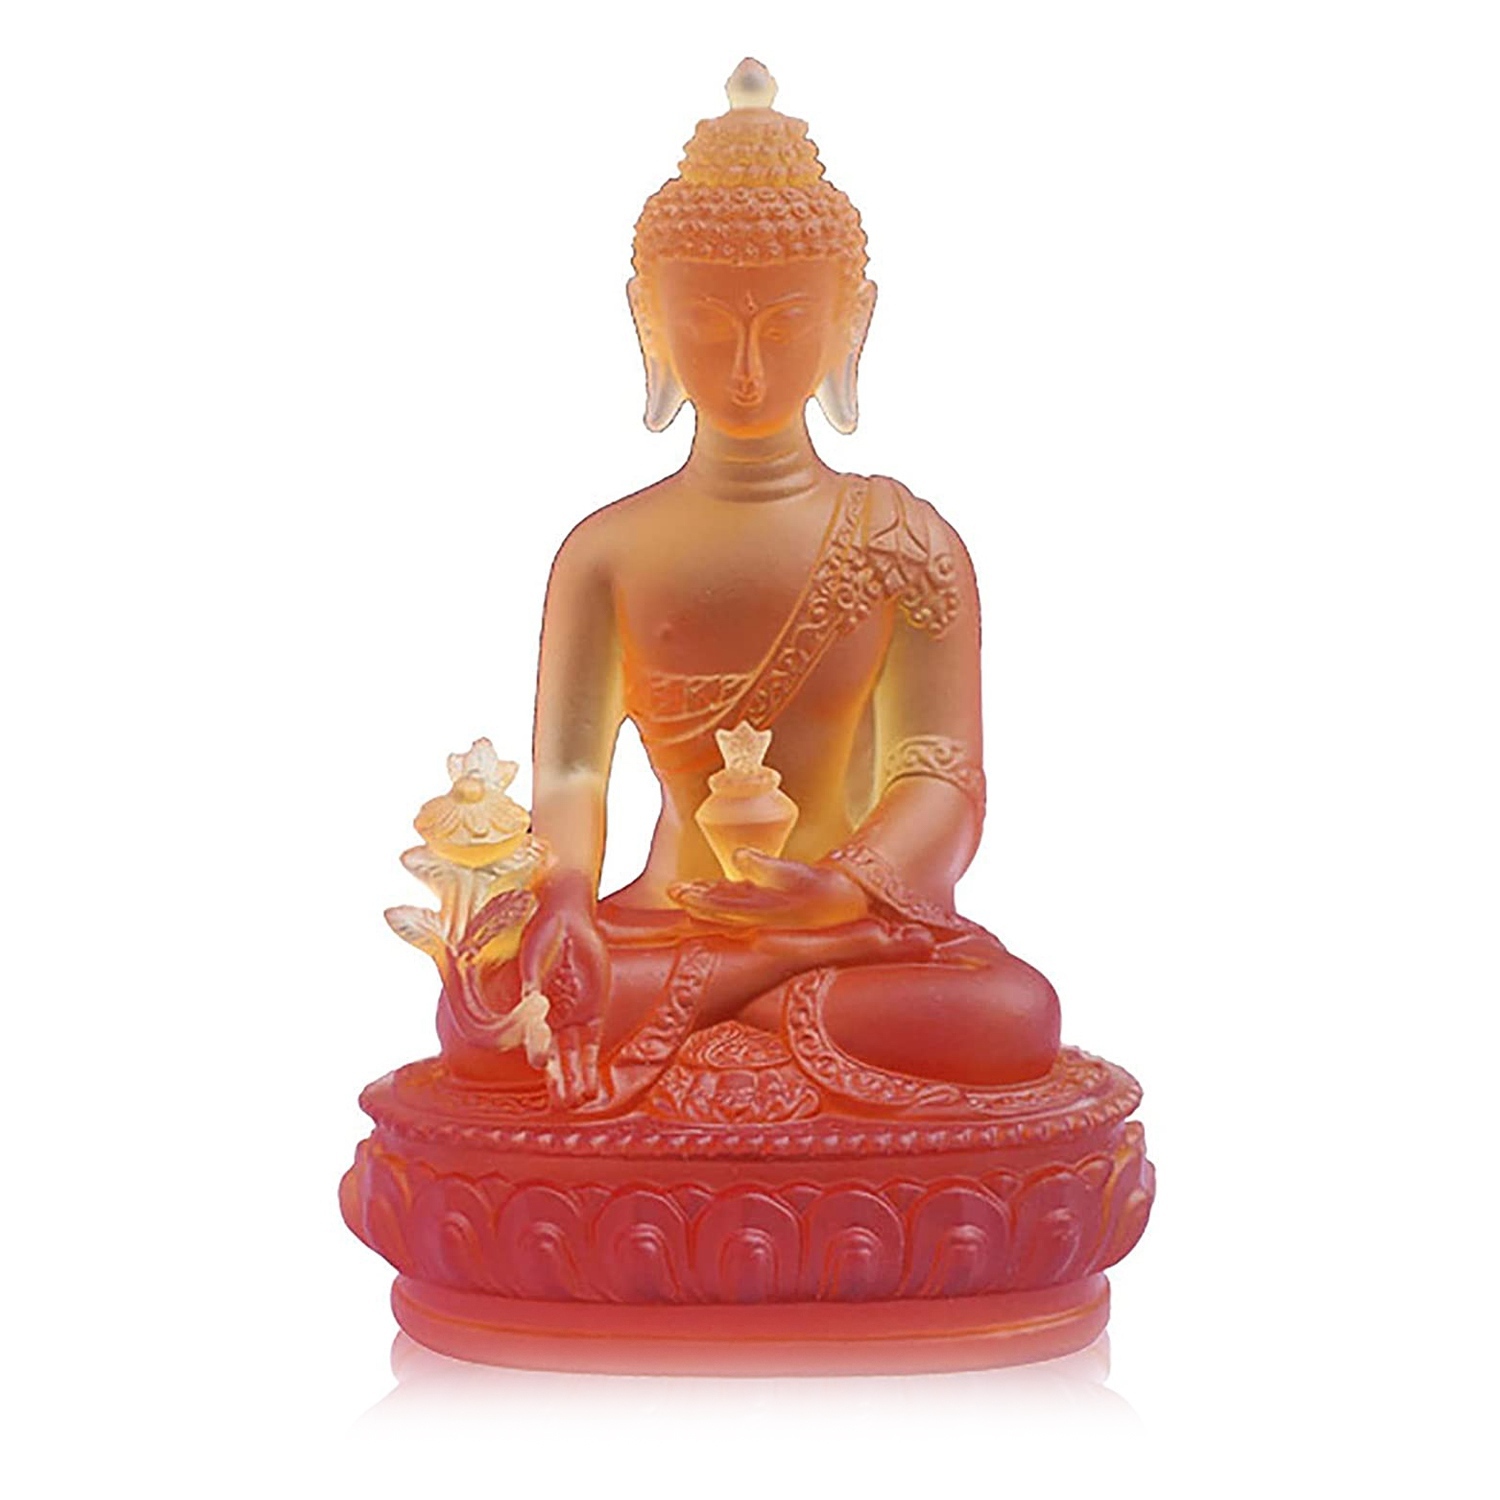 Медитация духов. Талисман статуэтка Будды. Будда медицины. Будда медицины статуэтка. Интерьер в буддийском стиле.